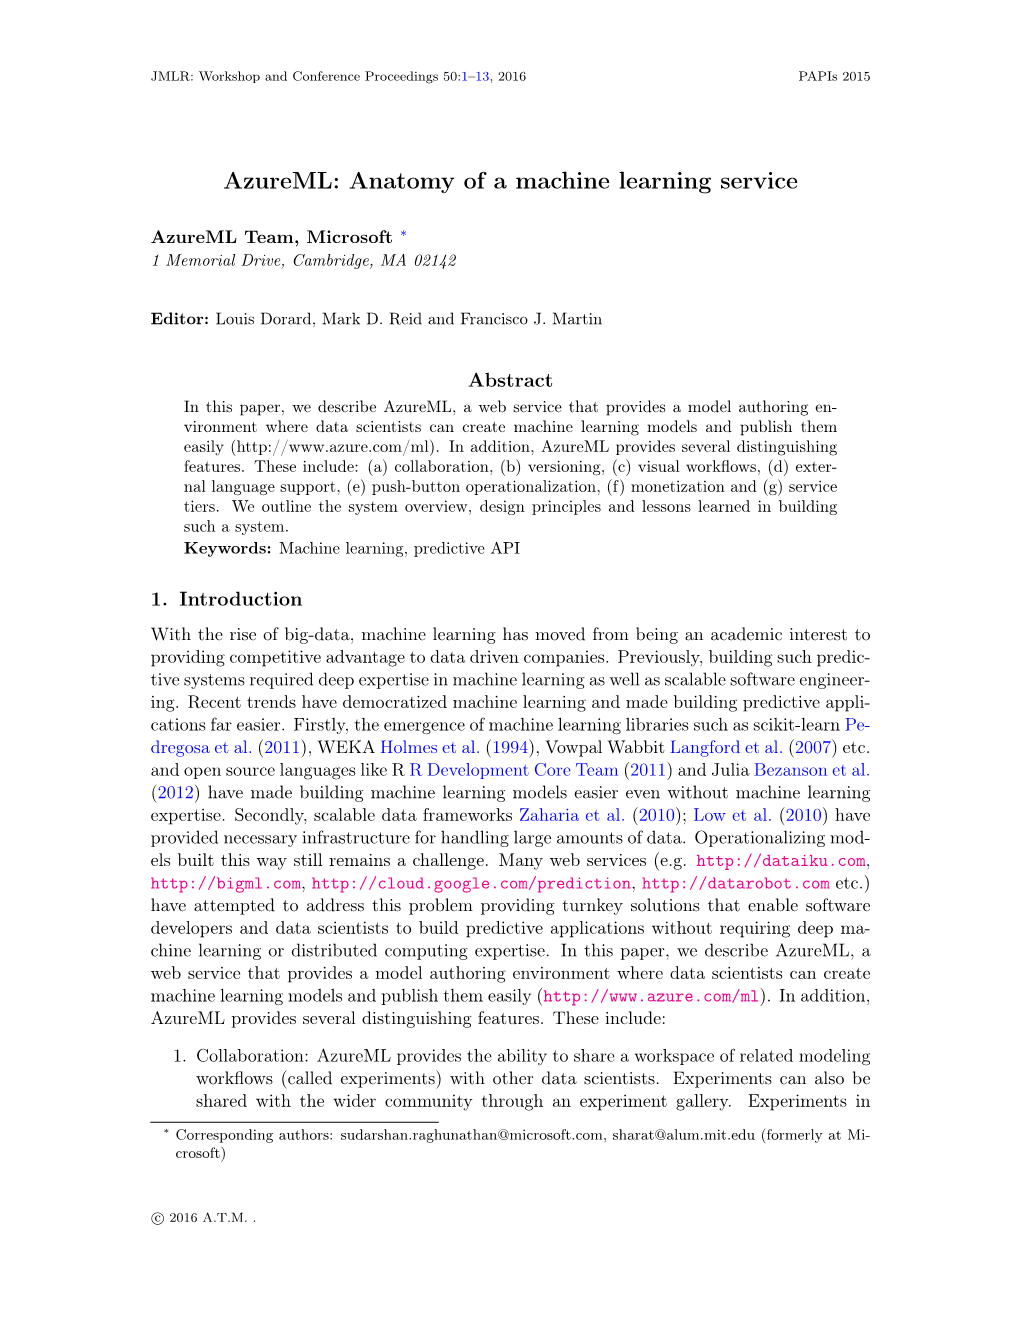 Azureml: Anatomy of a Machine Learning Service